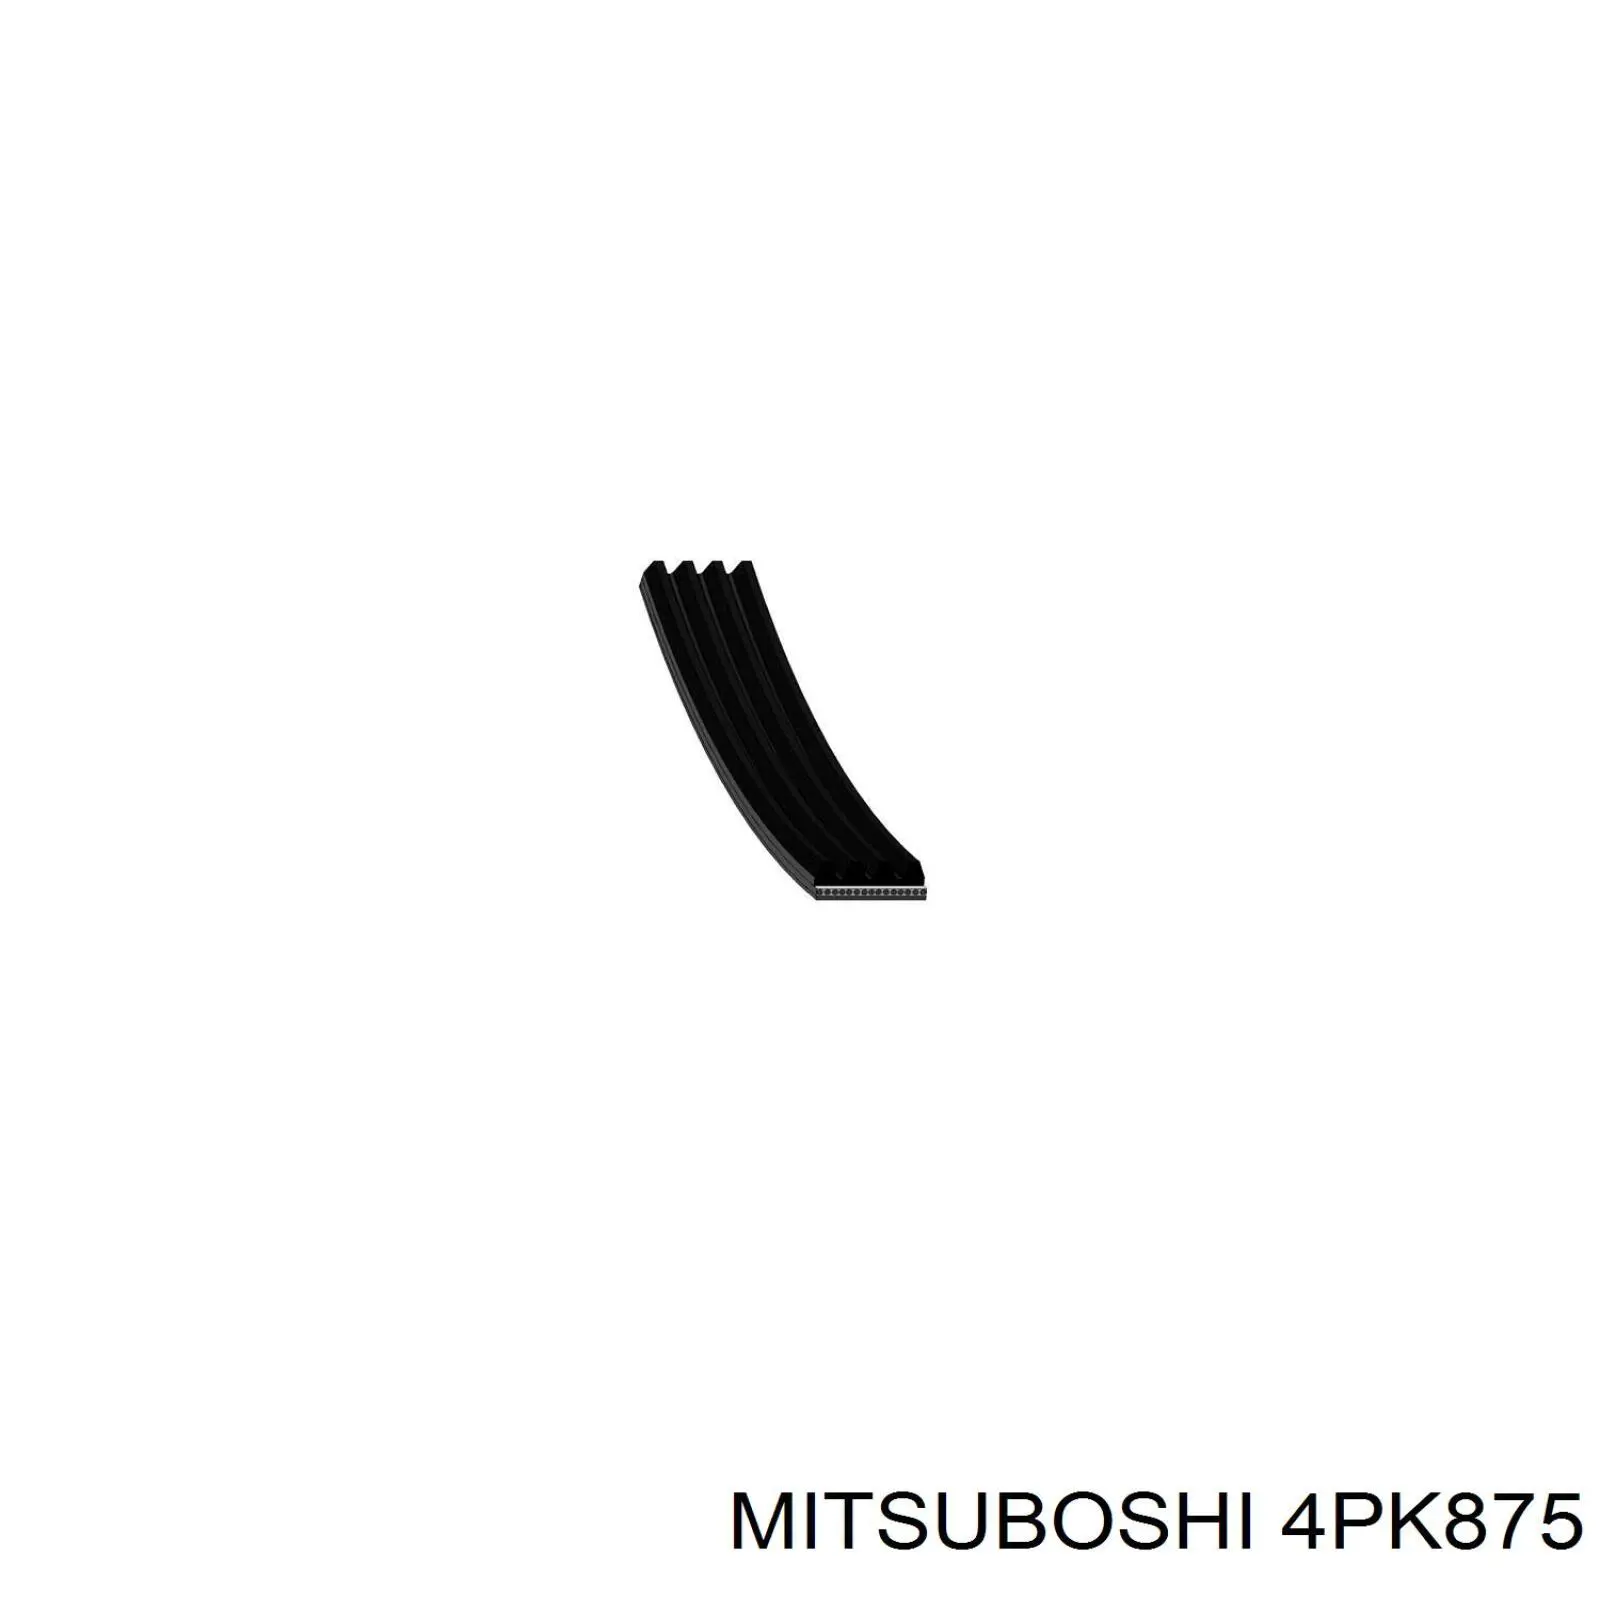 4PK875 Mitsuboshi correa trapezoidal